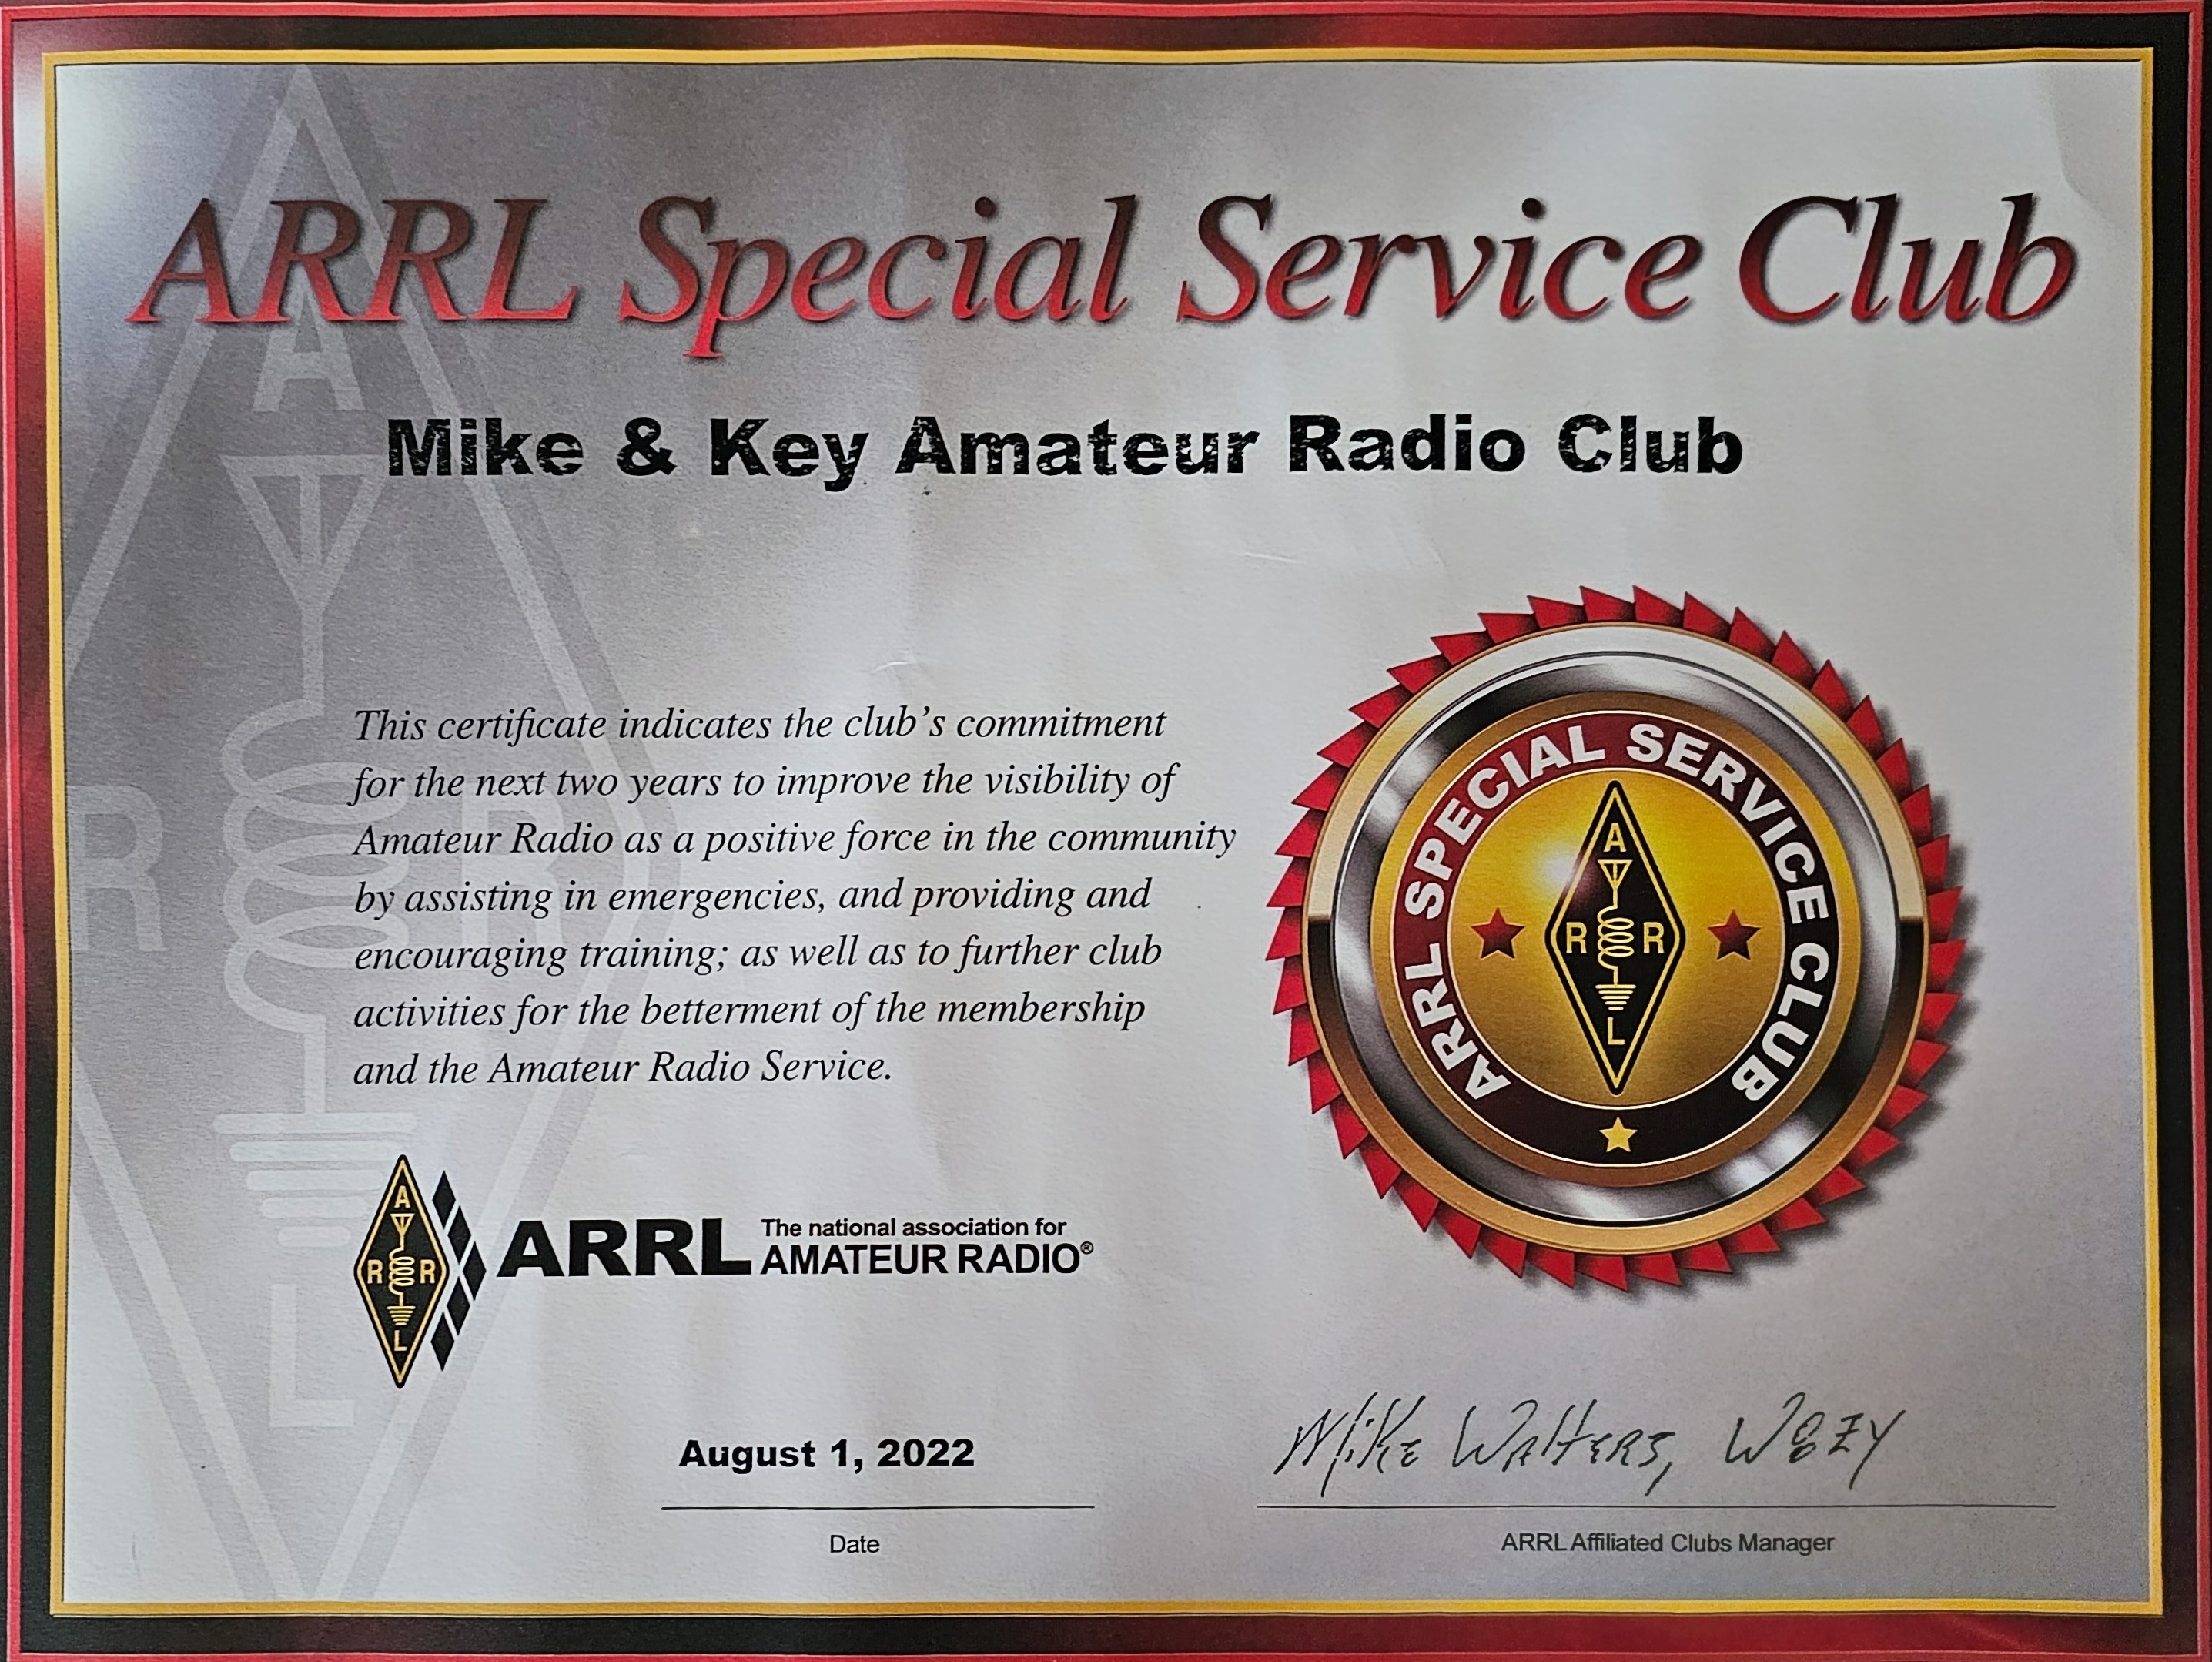 ARRL Special Service Club Award, 2020 to 2022